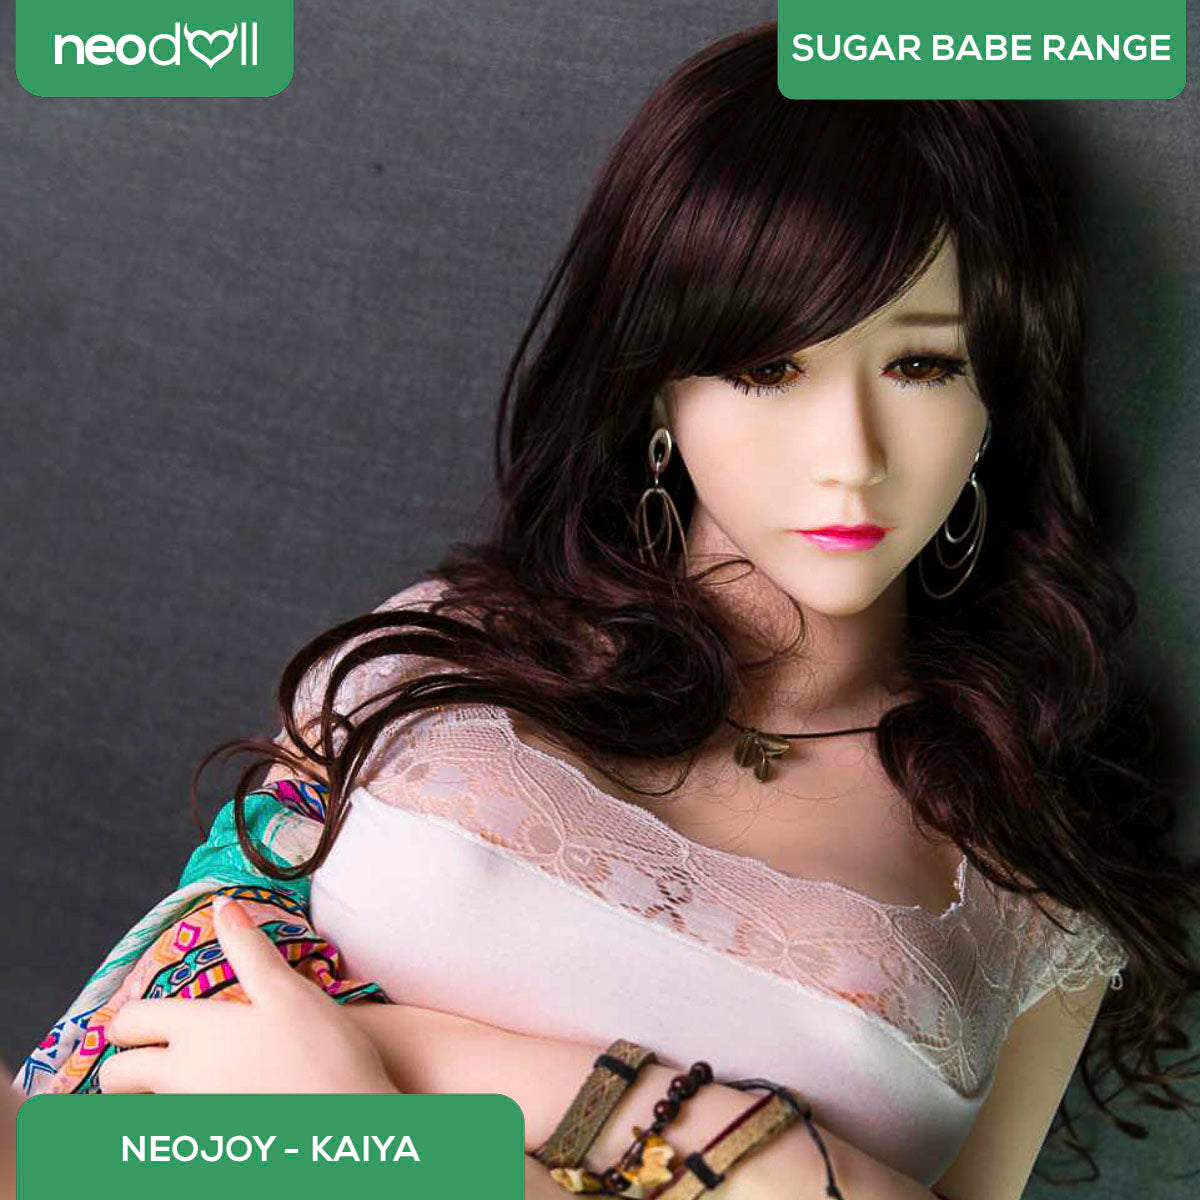 Sex Doll Kaiya | 165cm Height | Natural Skin | Shrug & Standing & Gel Breast | Neodoll Sugar Babe